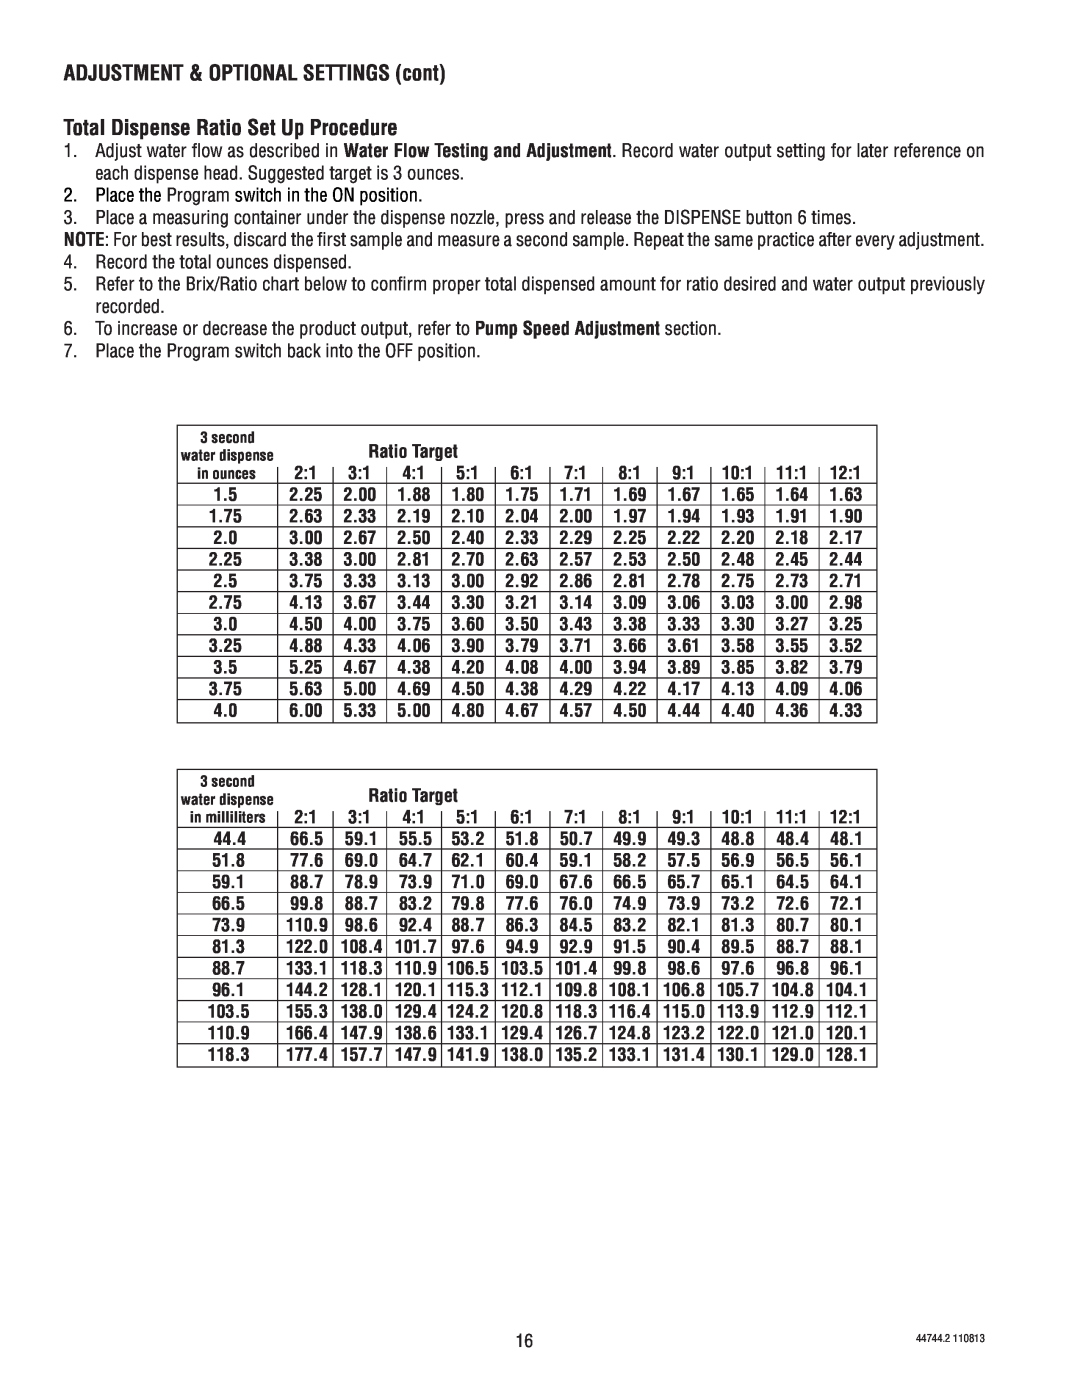 Bunn JDF-4S ADJUSTMENT & OPTIONAL SETTINGS cont, Total Dispense Ratio Set Up Procedure, Ratio Target, 1.64, 1.63, 1.91 